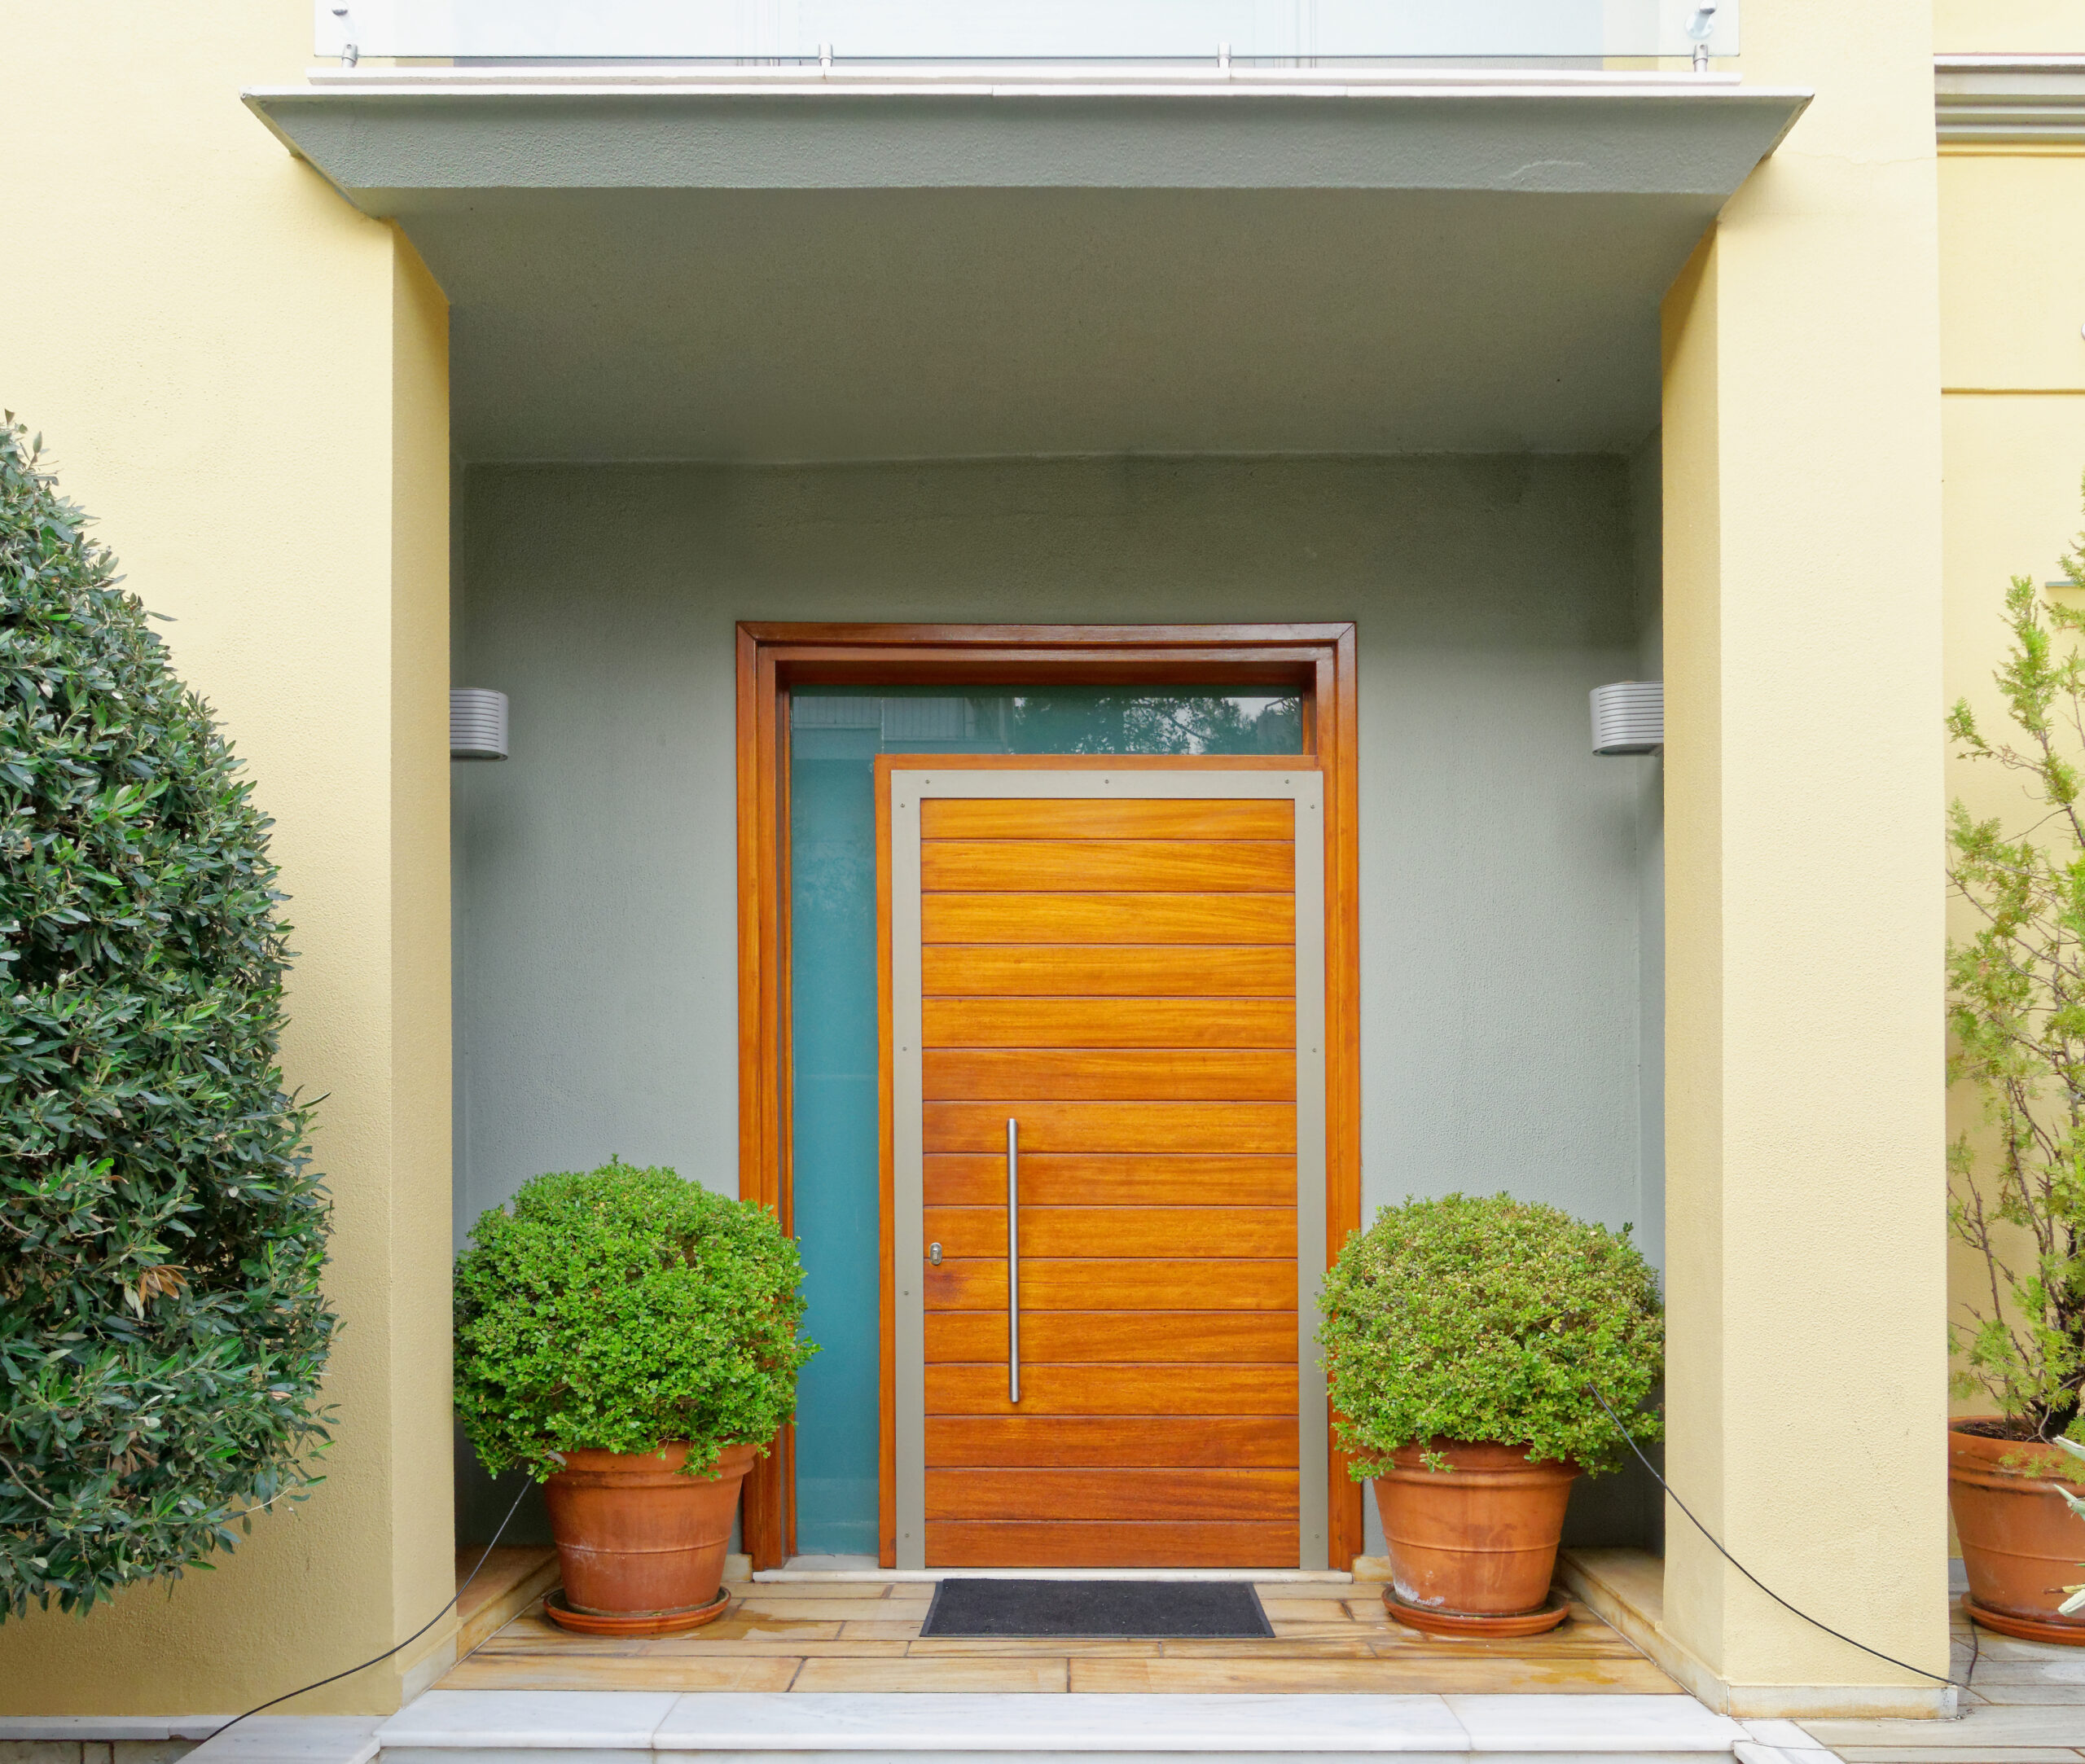 Cómo elegir una puerta exterior? 4 tips